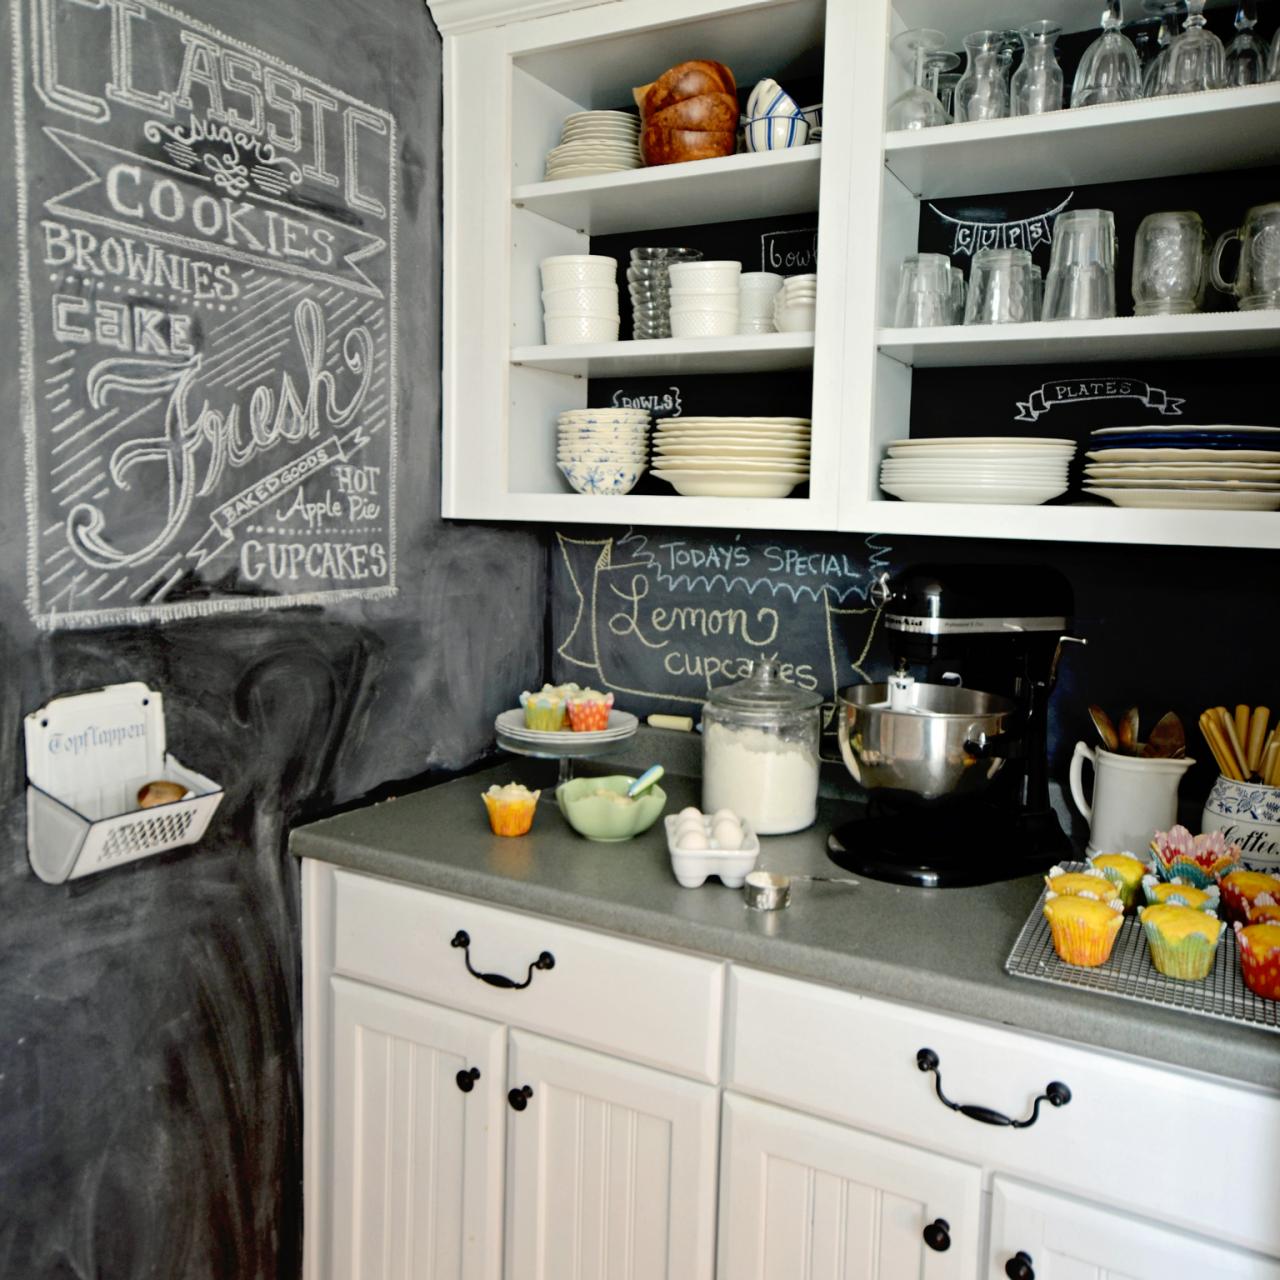 How to Create a Chalkboard Kitchen Backsplash